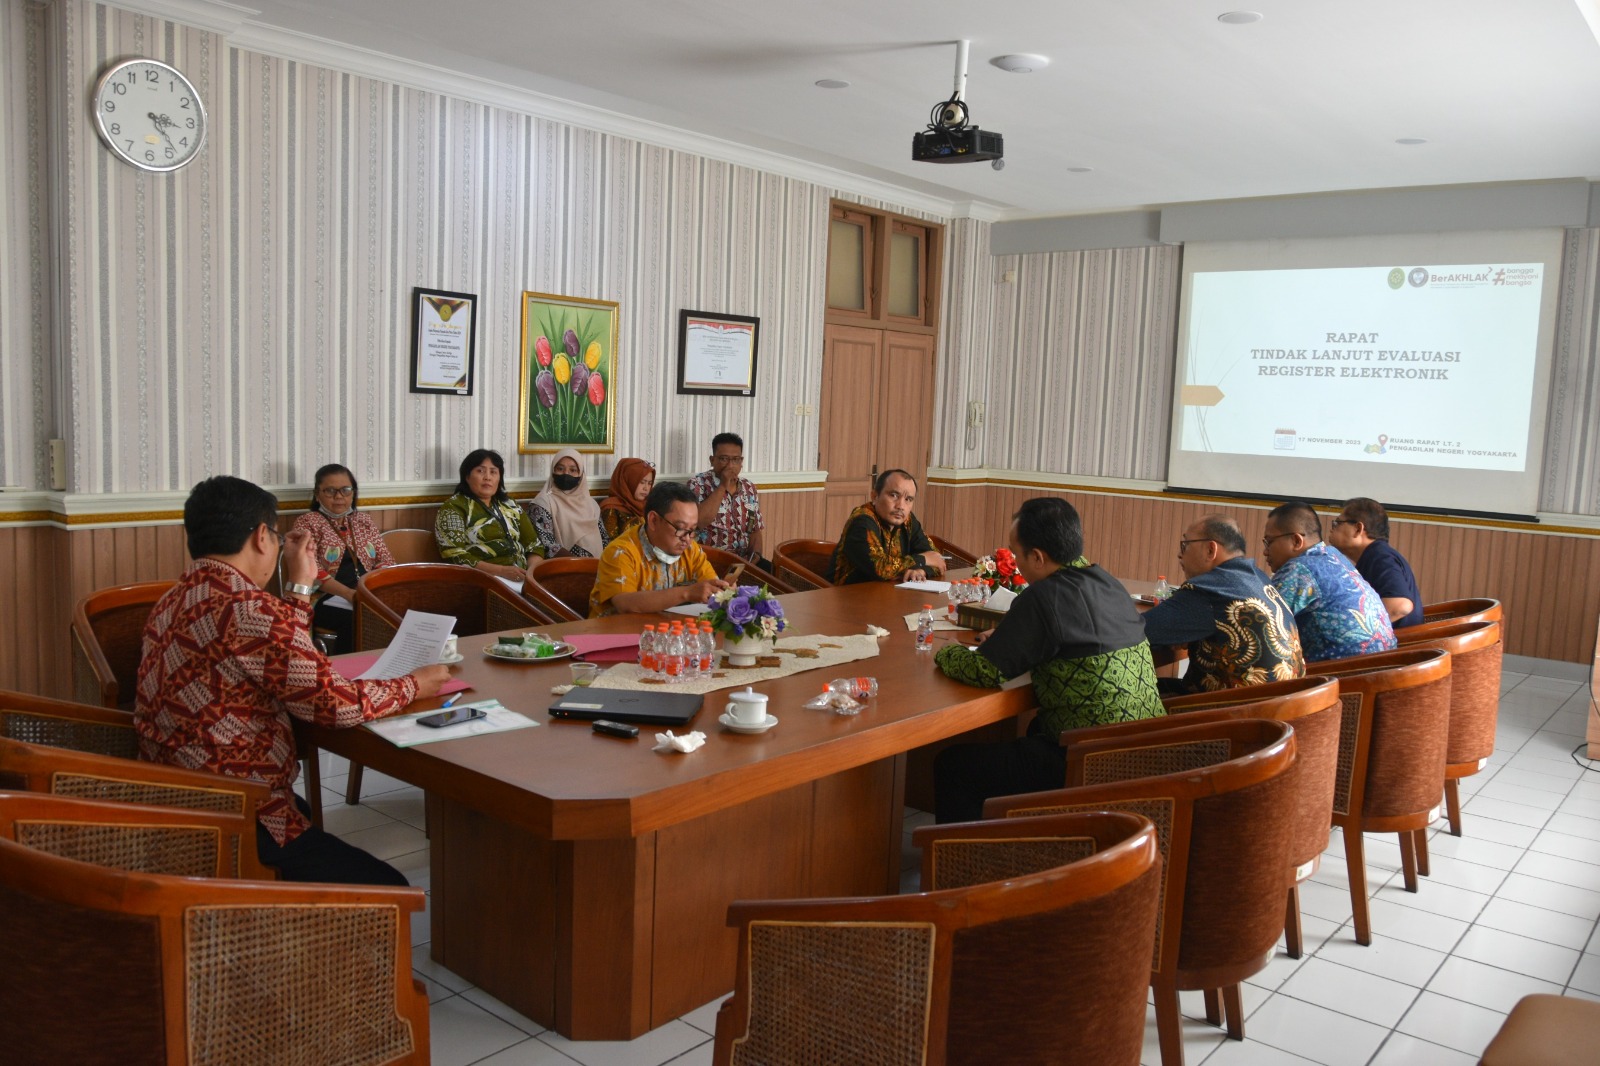 Rapat Tindak Lanjut Hasil Monev Implementasi register elektronik Pengadilan Negeri Yogyakarta